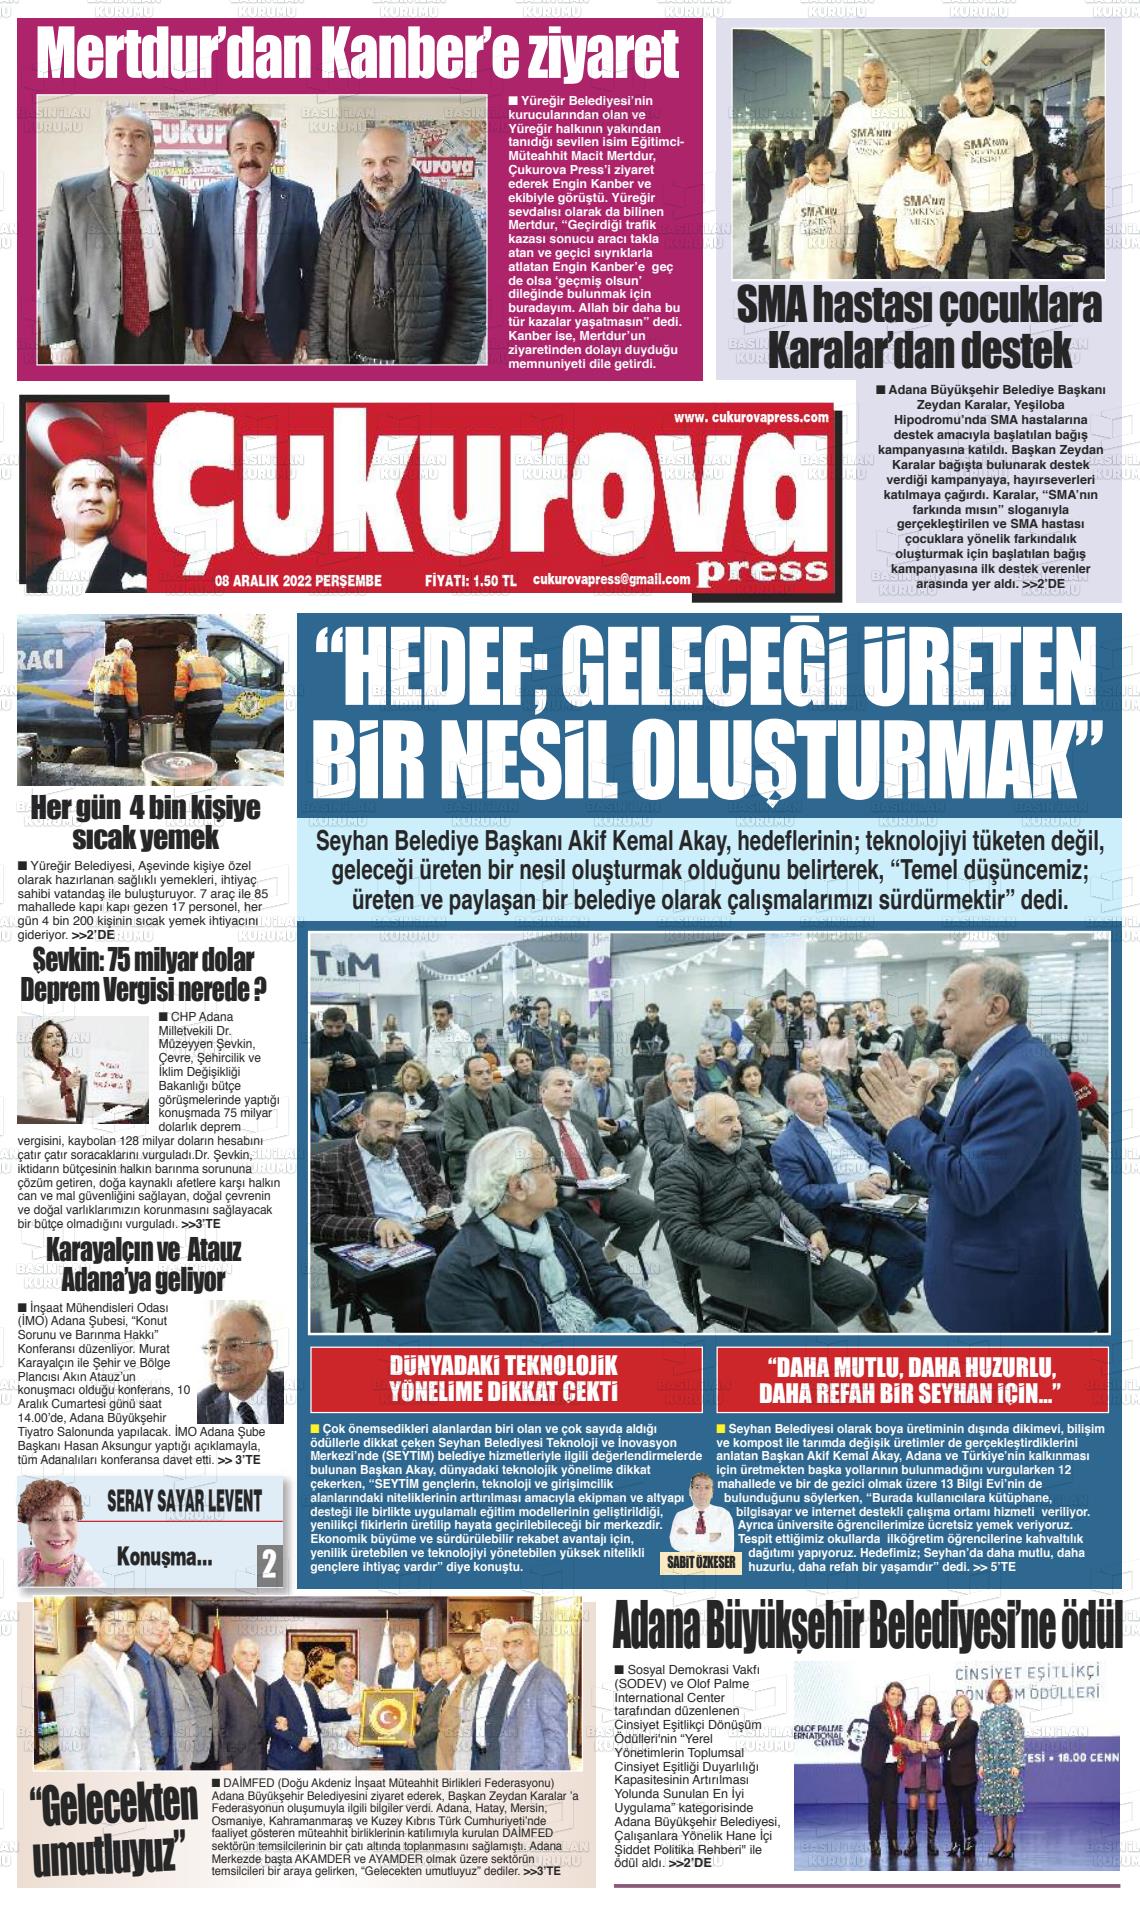 08 Aralık 2022 Çukurova Press Gazete Manşeti